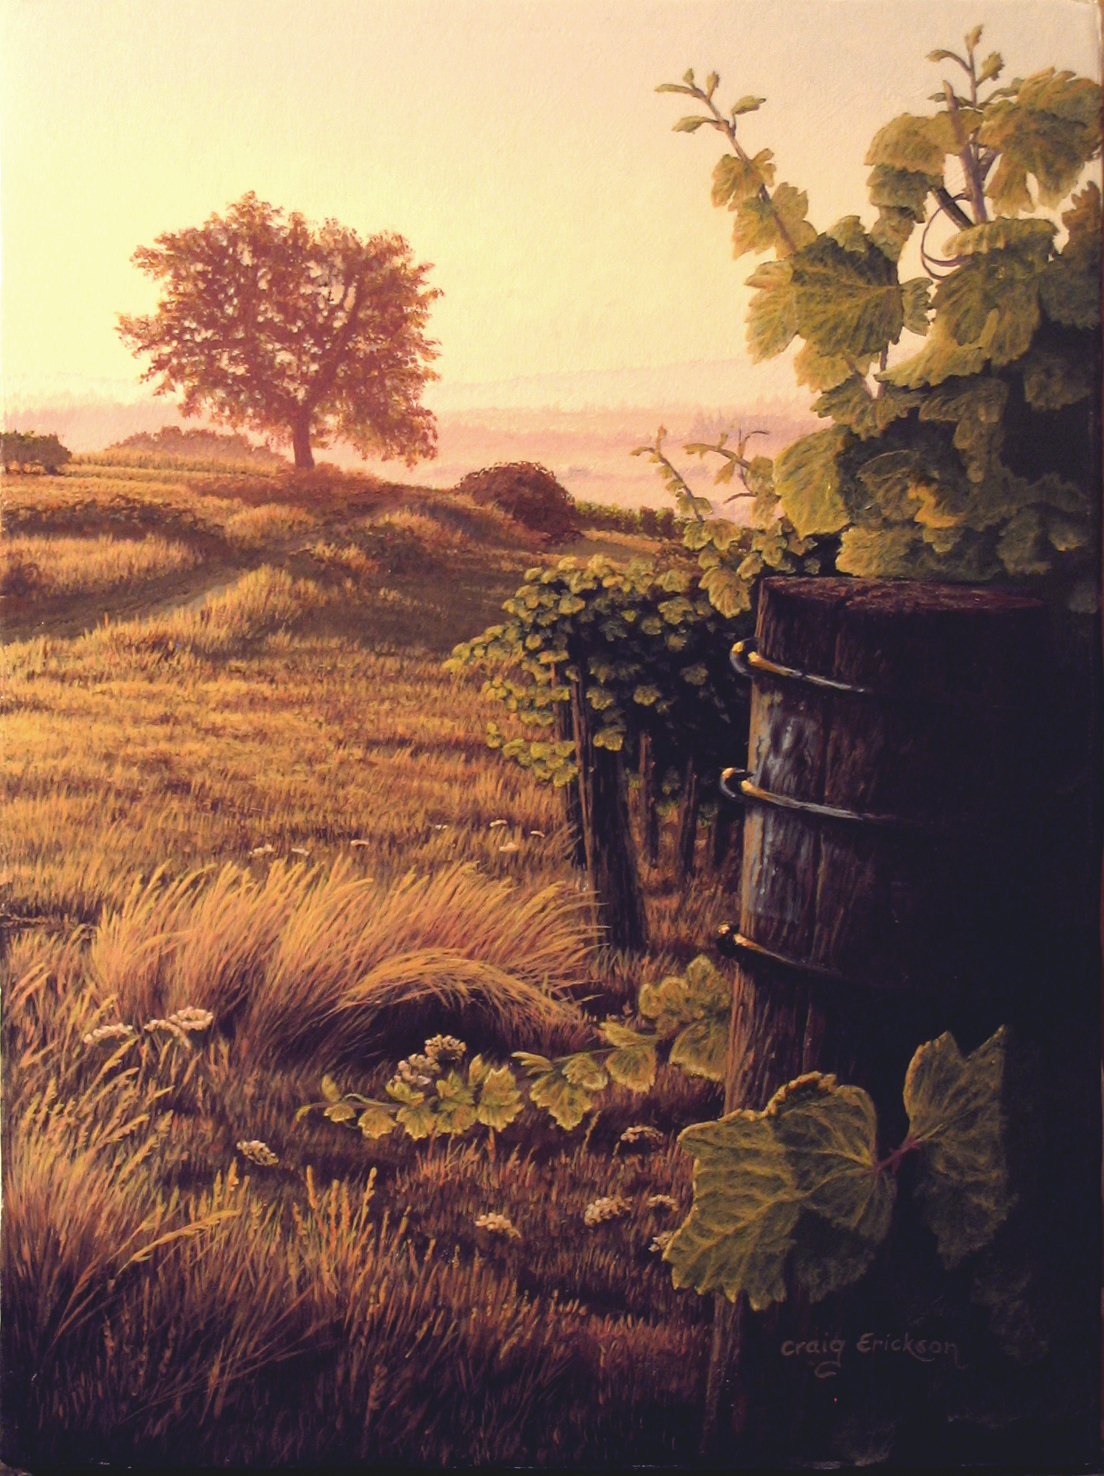 Study for Sunrise At Benton Lane, (c) 2008 by Craig Erickson